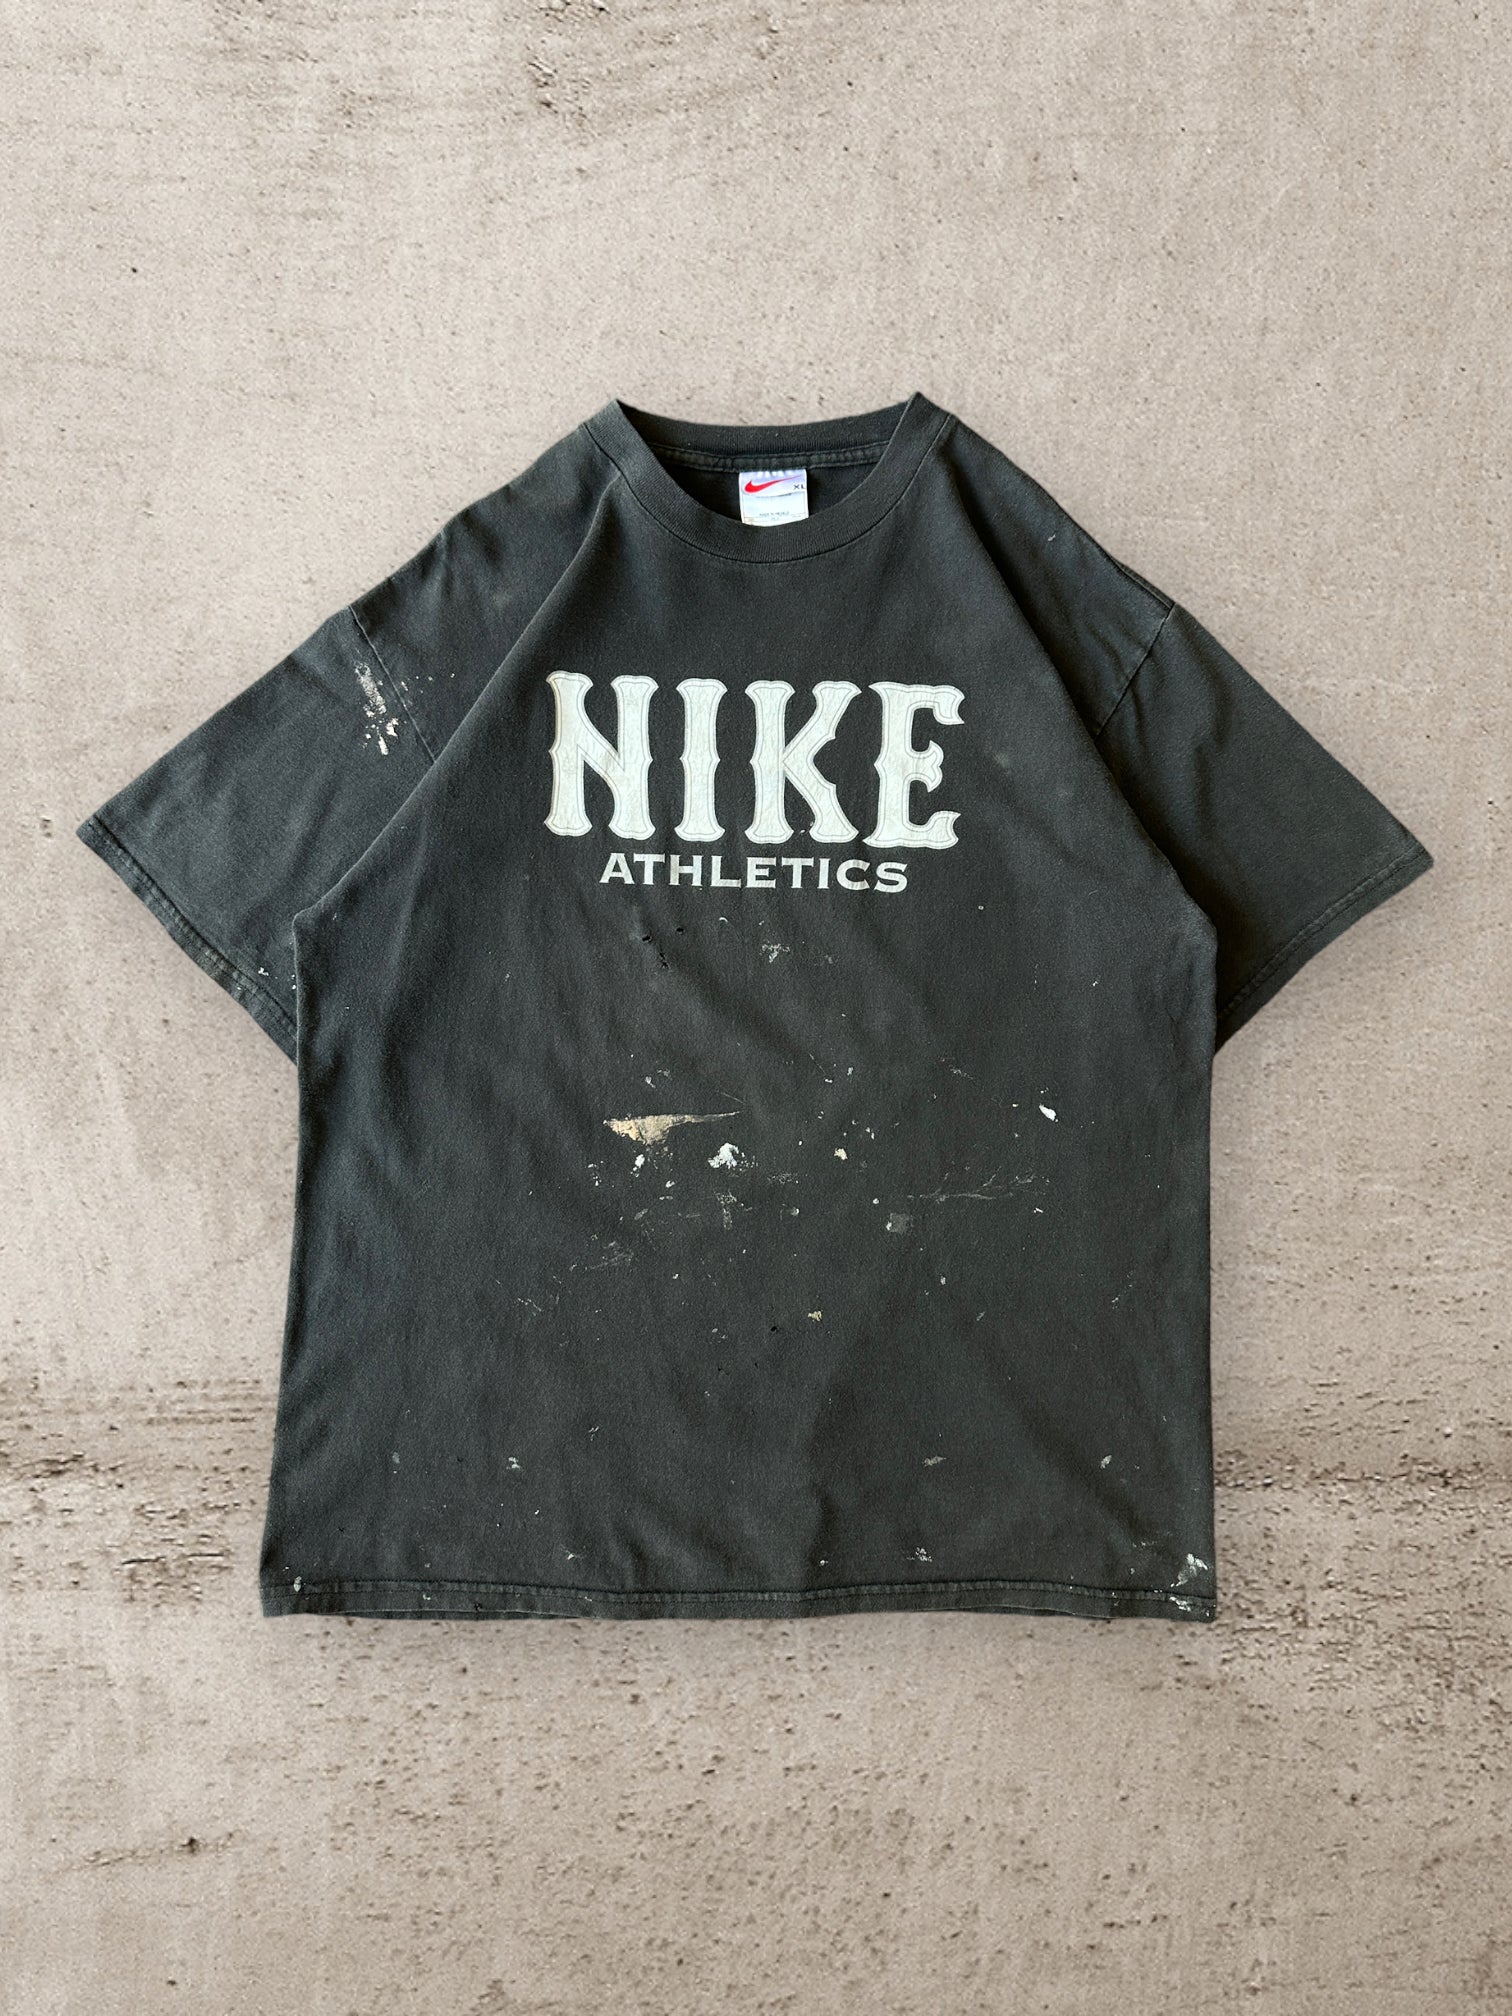 90s Nike Athletics Distressed T-Shirt - XL